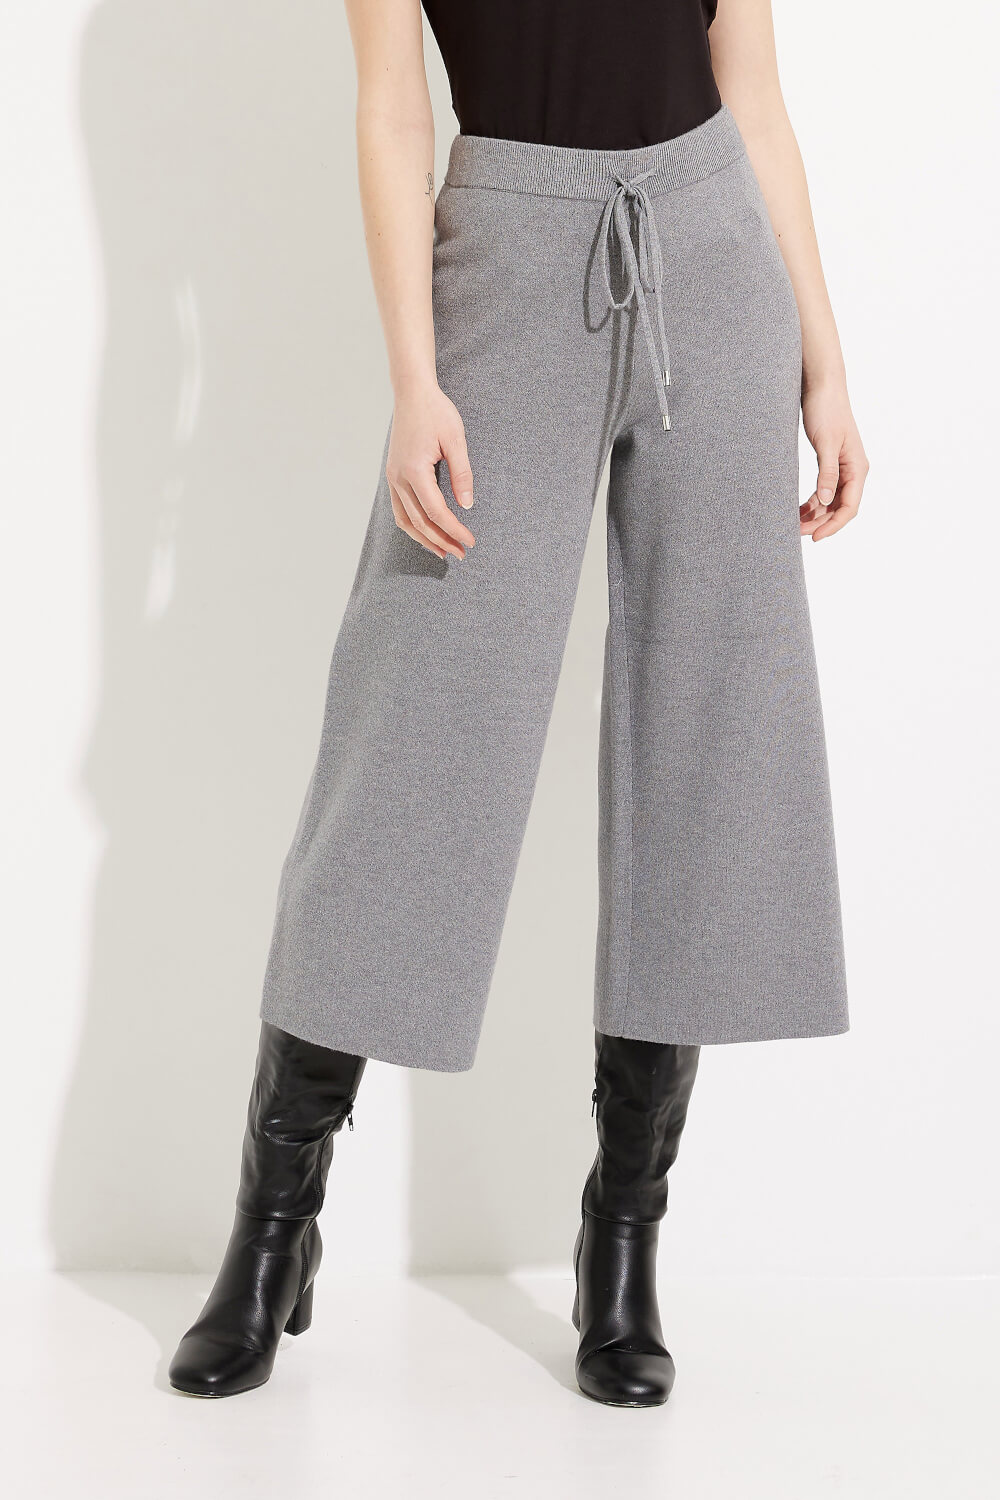 Wide Leg Drawstring Pants Style 233908. Grey Melange